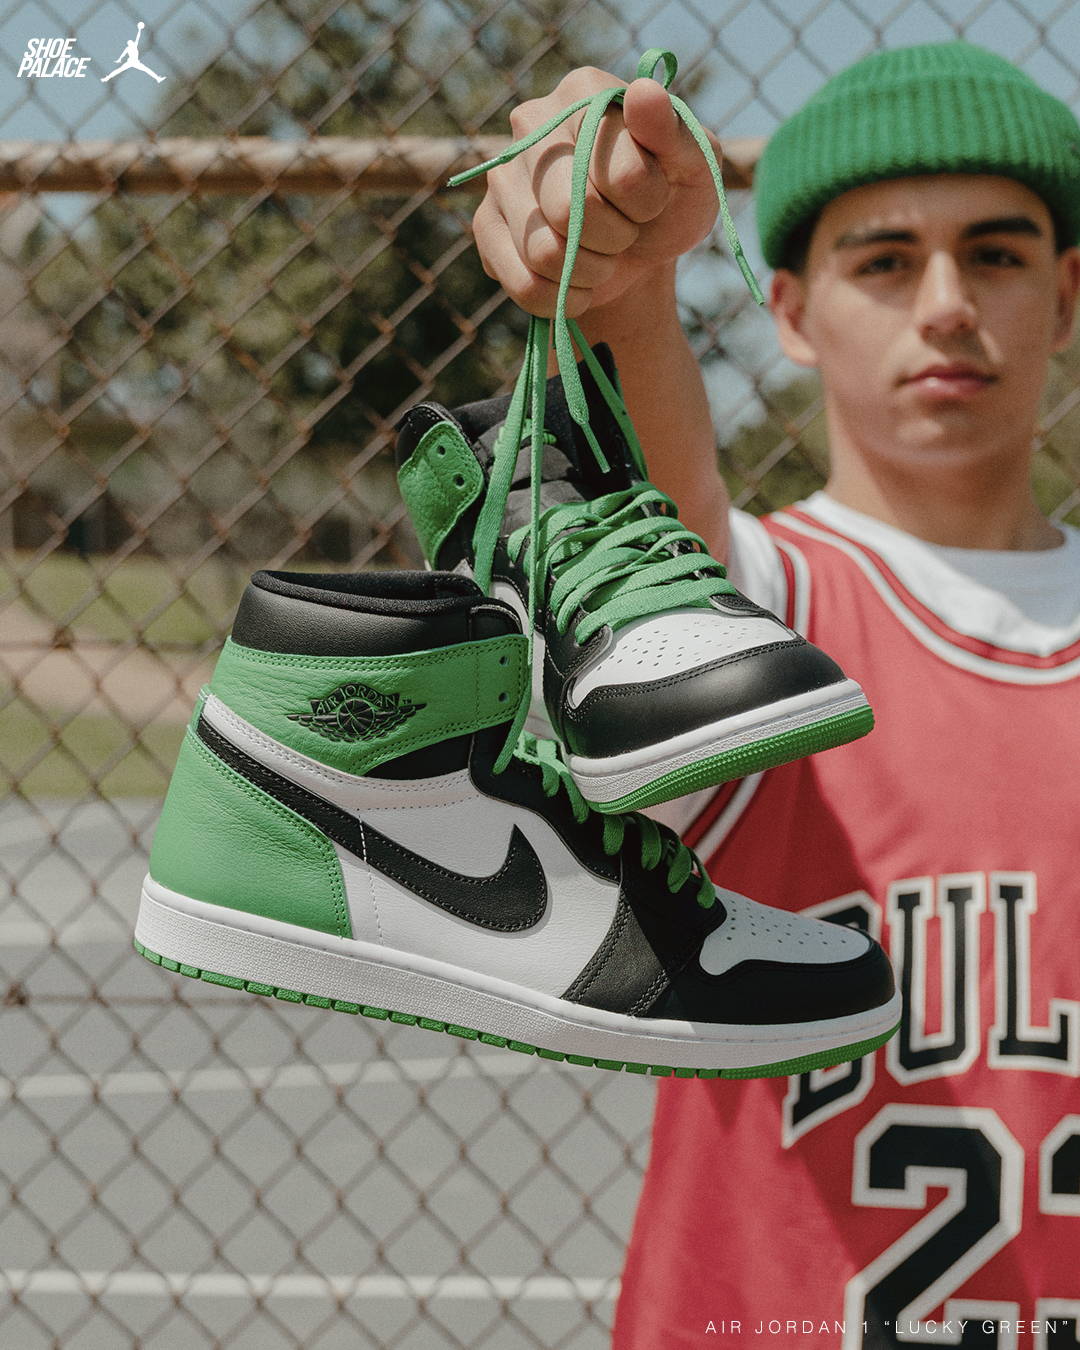 The Air Jordan 1 High OG “Lucky Green” | Shoe Palace Blog